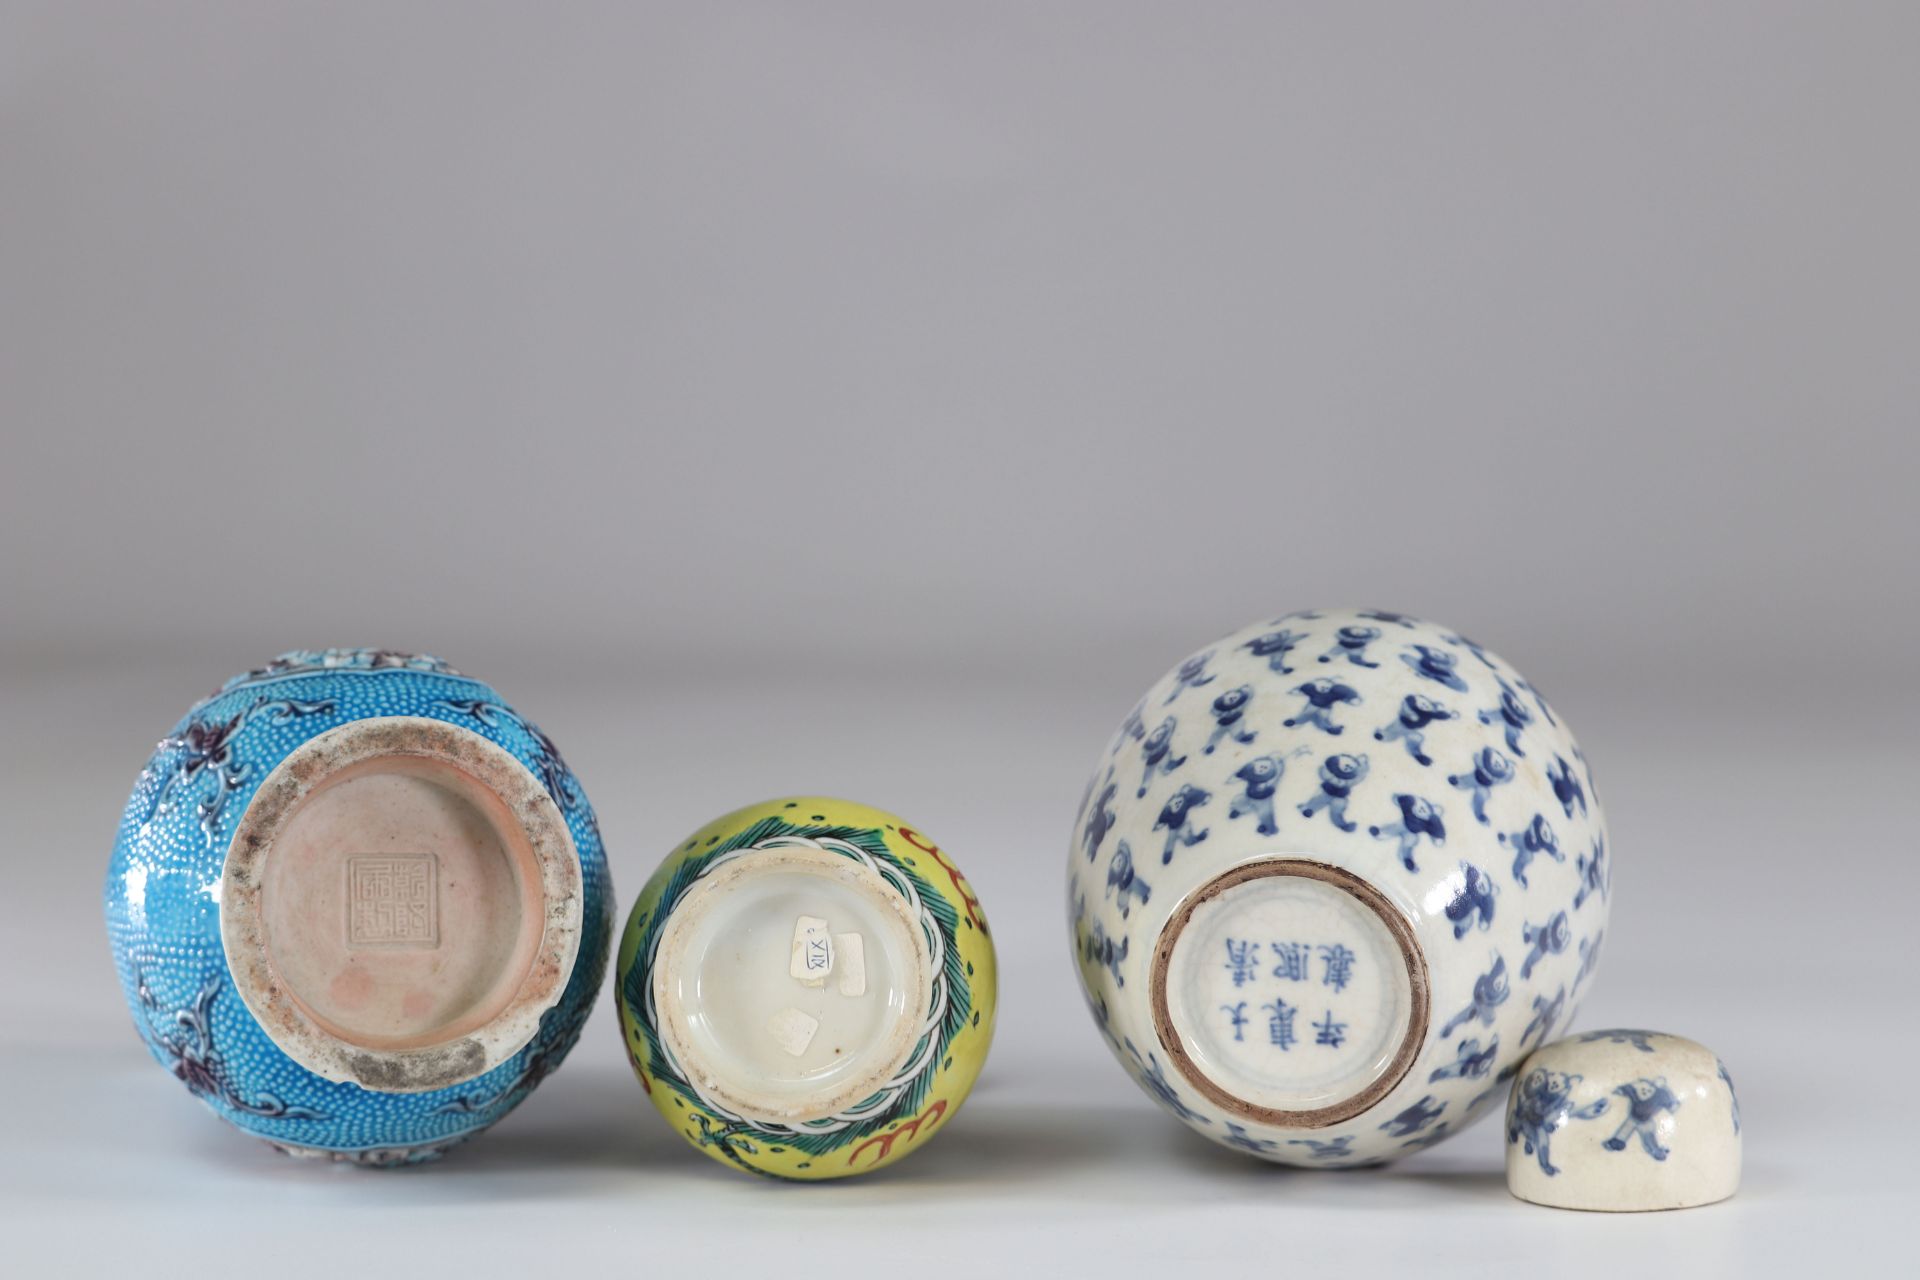 China set of 3 porcelains - Image 3 of 3